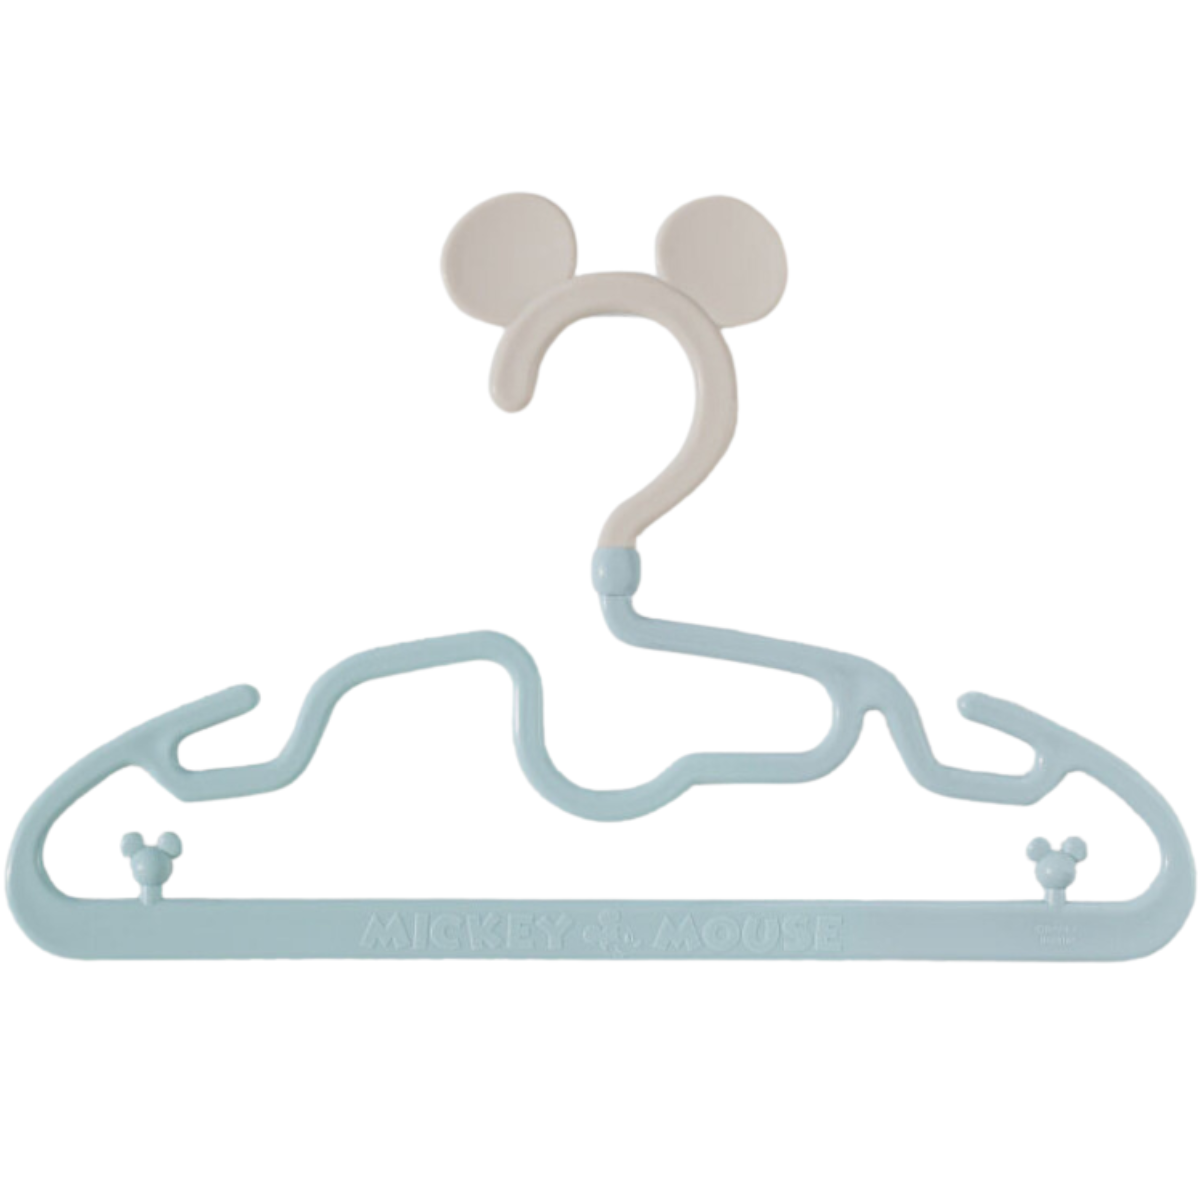 迪士尼 Disney 米妮 Minnie Mouse 米奇 Mickey Mouse 兒童 防滑 衣架 Nishiki Kasei